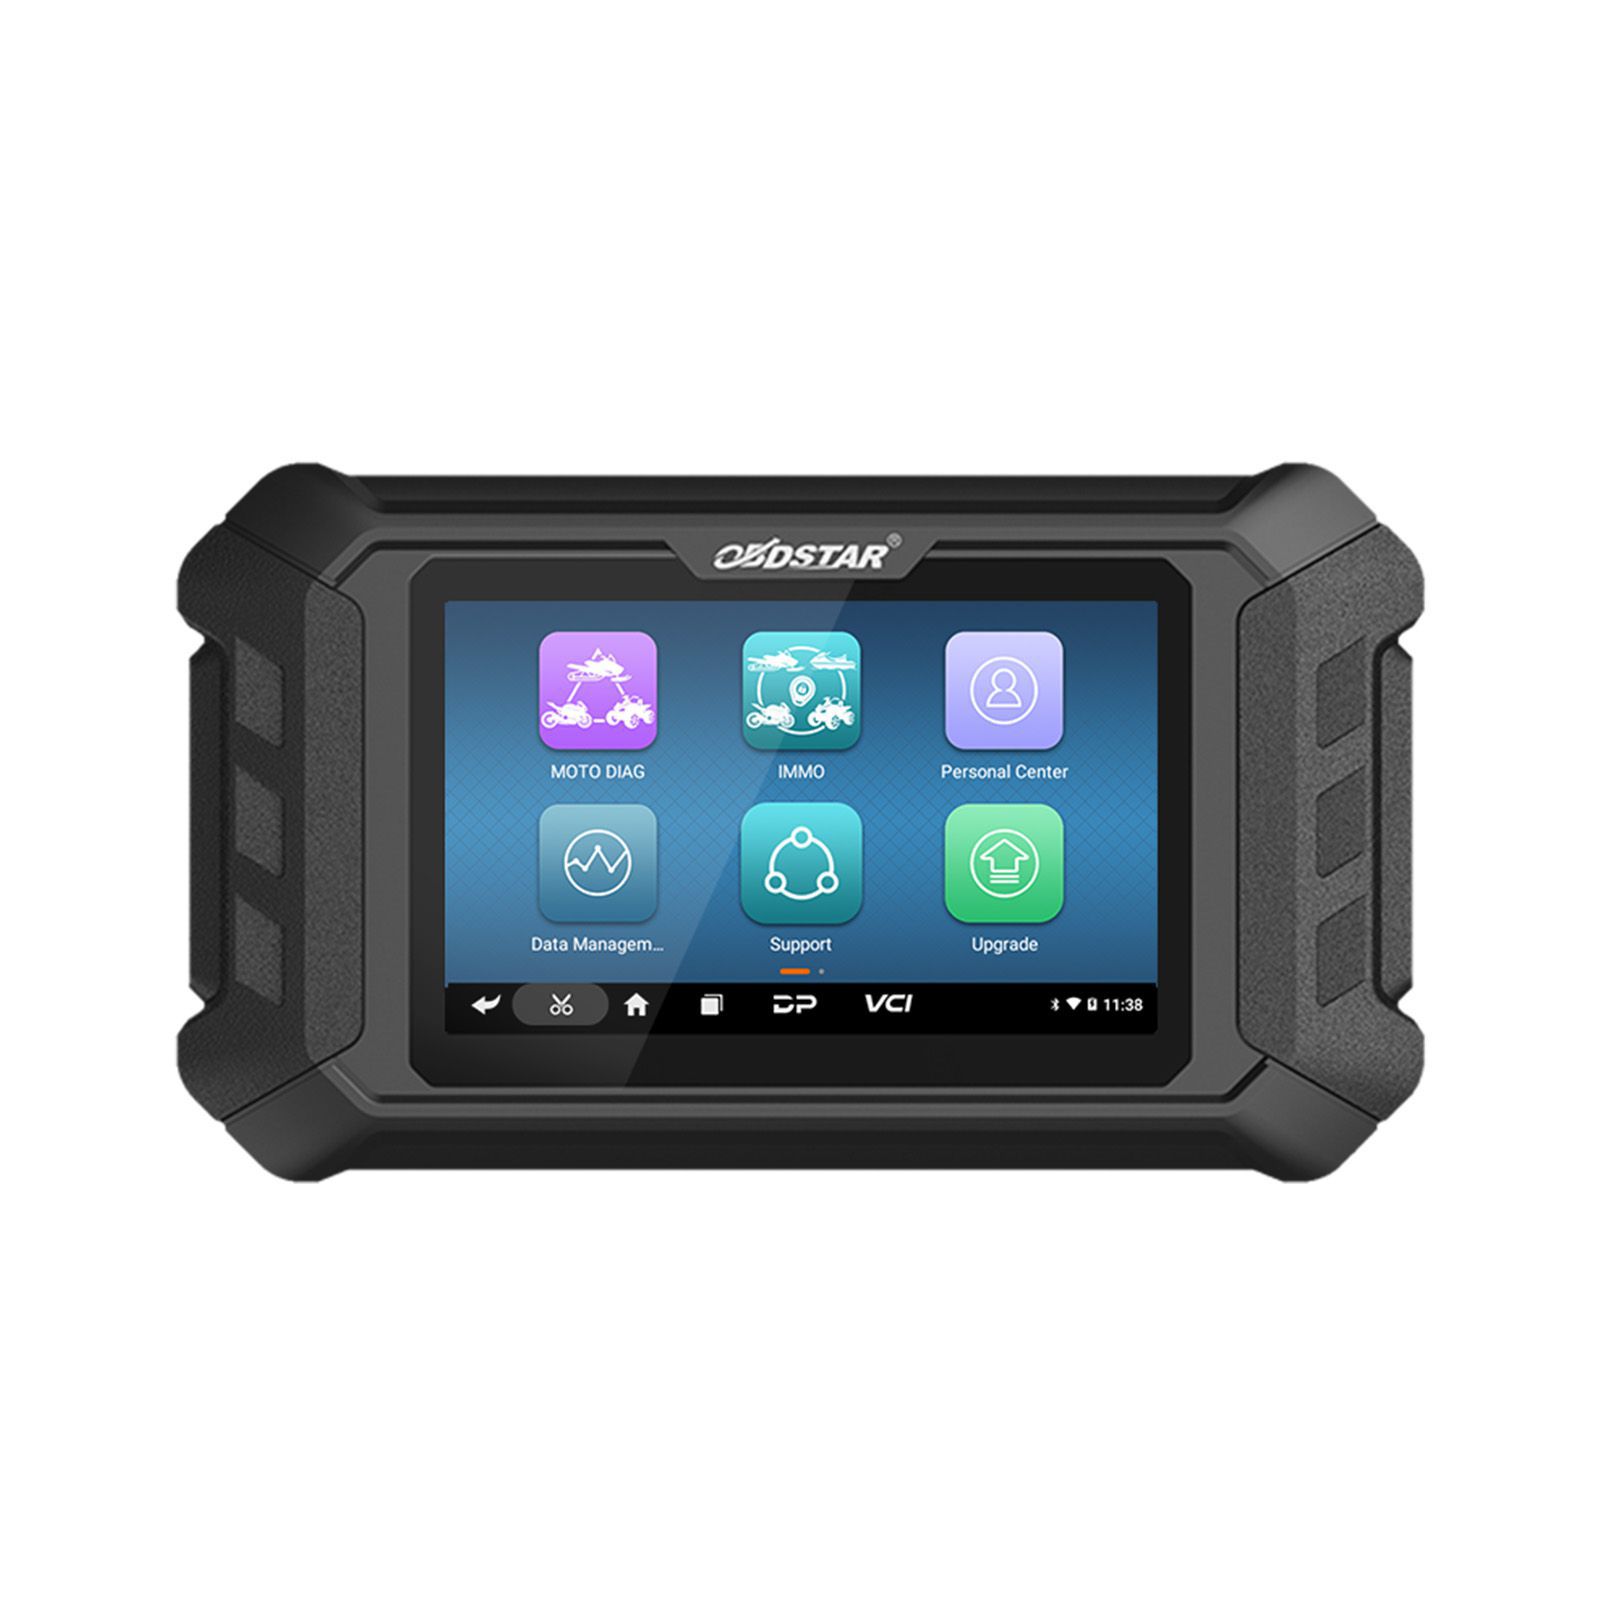 OBDSTAR iScan KTM/HUSQVARNA Intelligente Motorrad Diagnose Werkzeug Tragbare Tablet